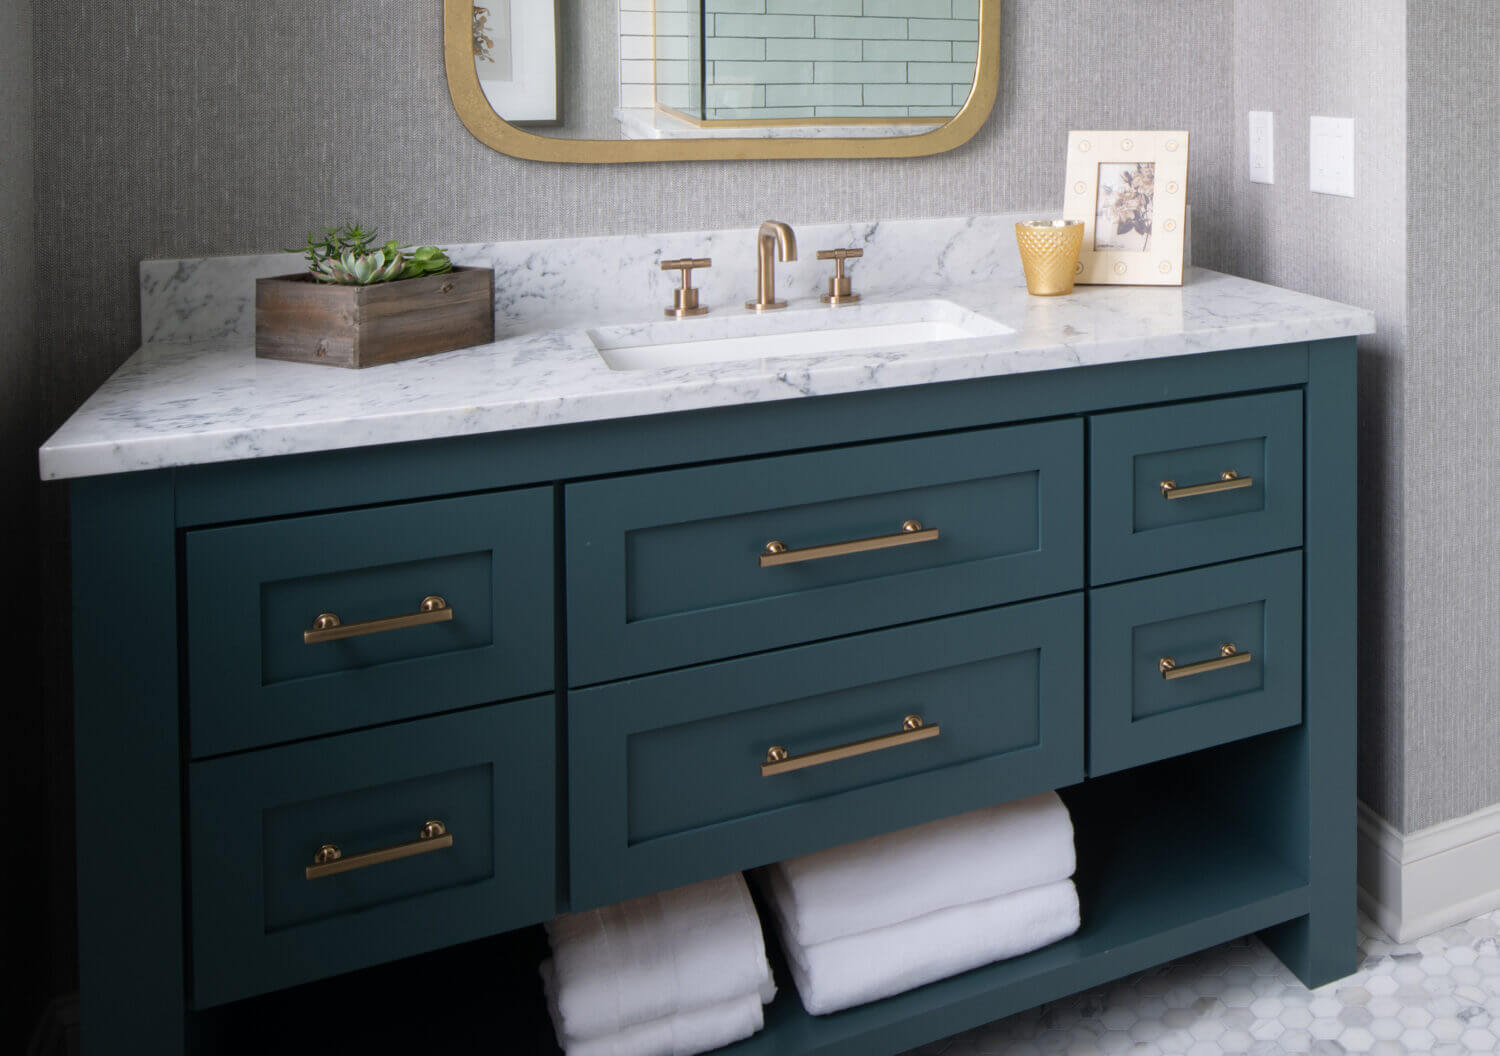 Teal Turquoise Bathroom Vanity